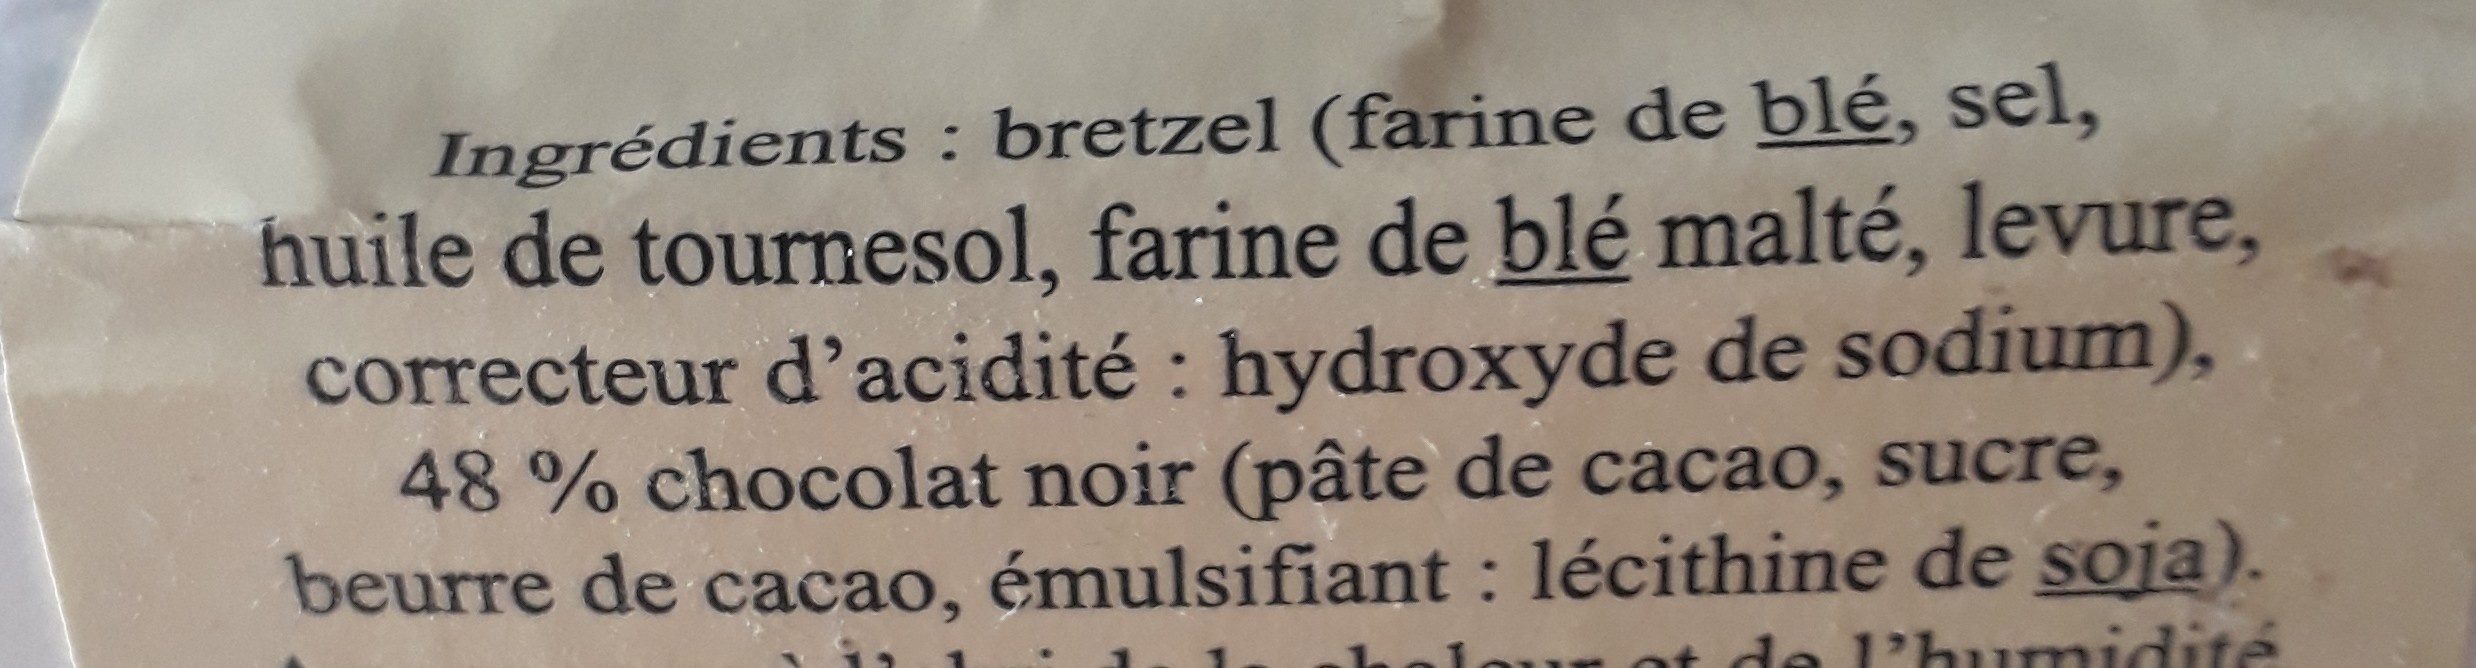 Sachet bretzels au chocolat noir - Ingredients - fr